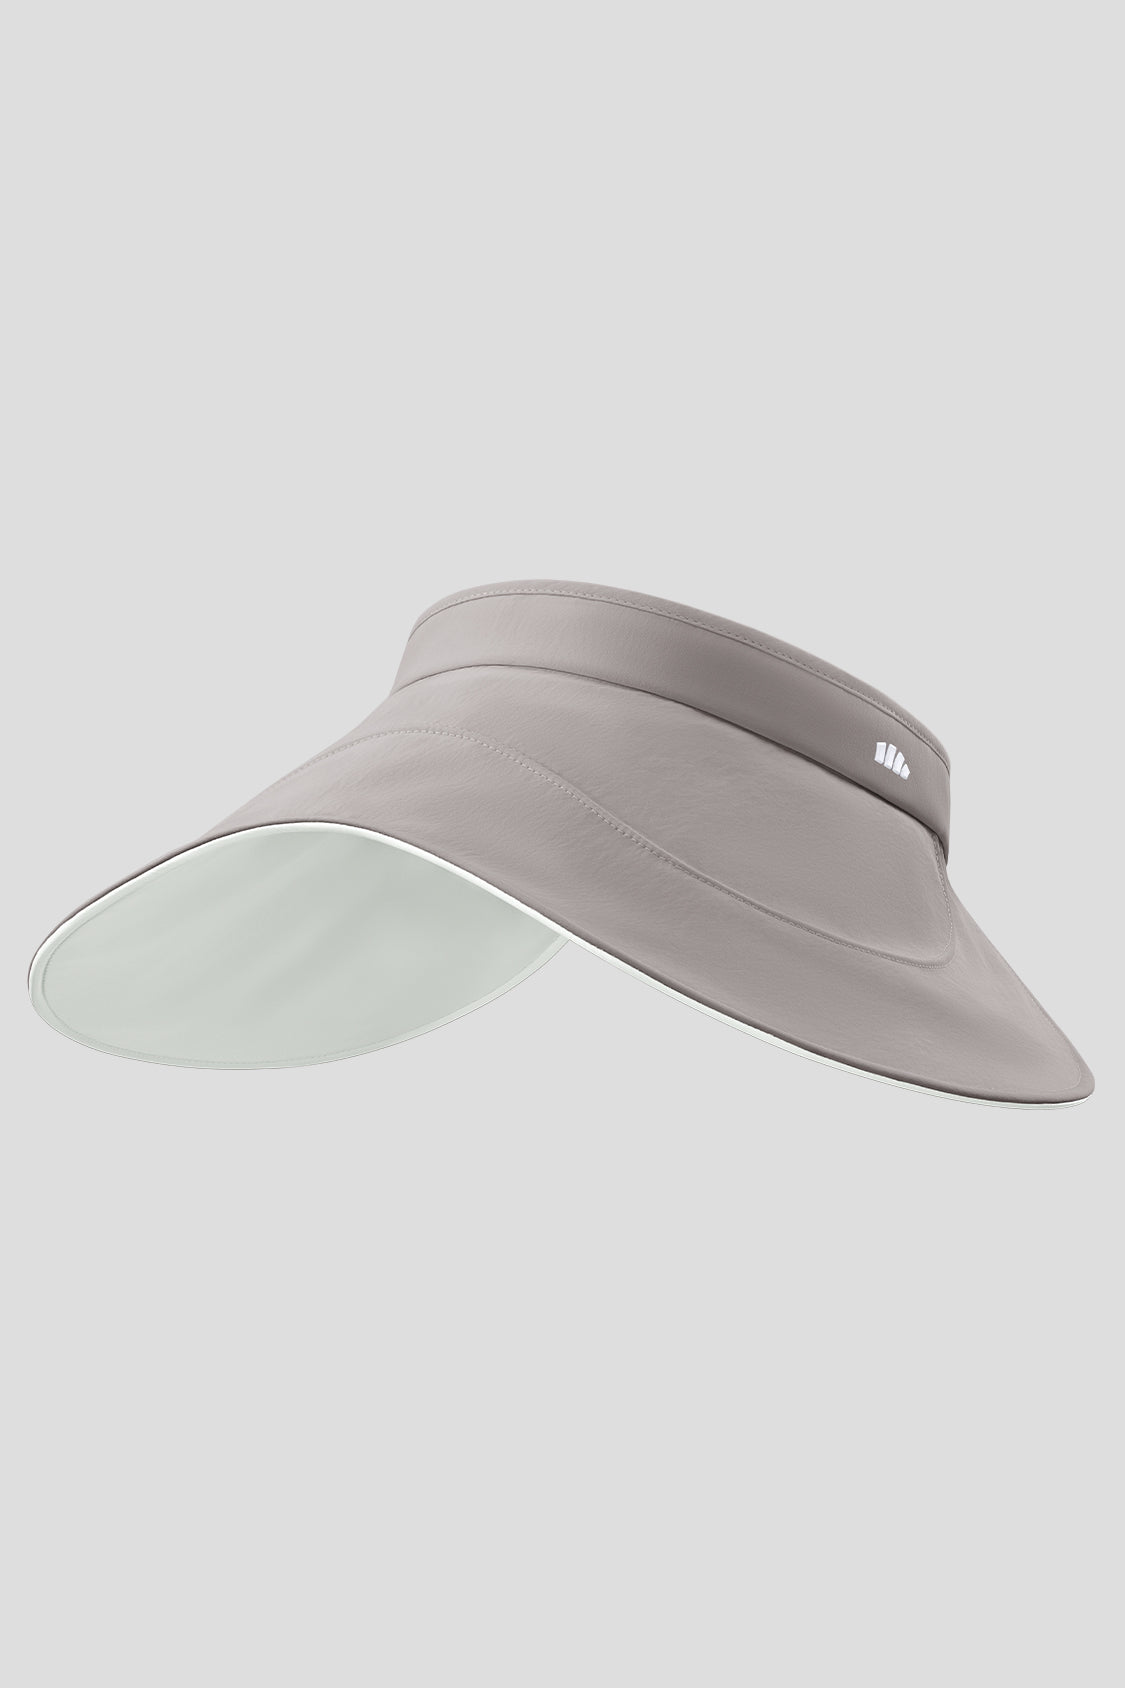 Sun Hat for Women, Beneunder UPF50+ Packable Wide Brim UV Protection Sun  Visor Hat